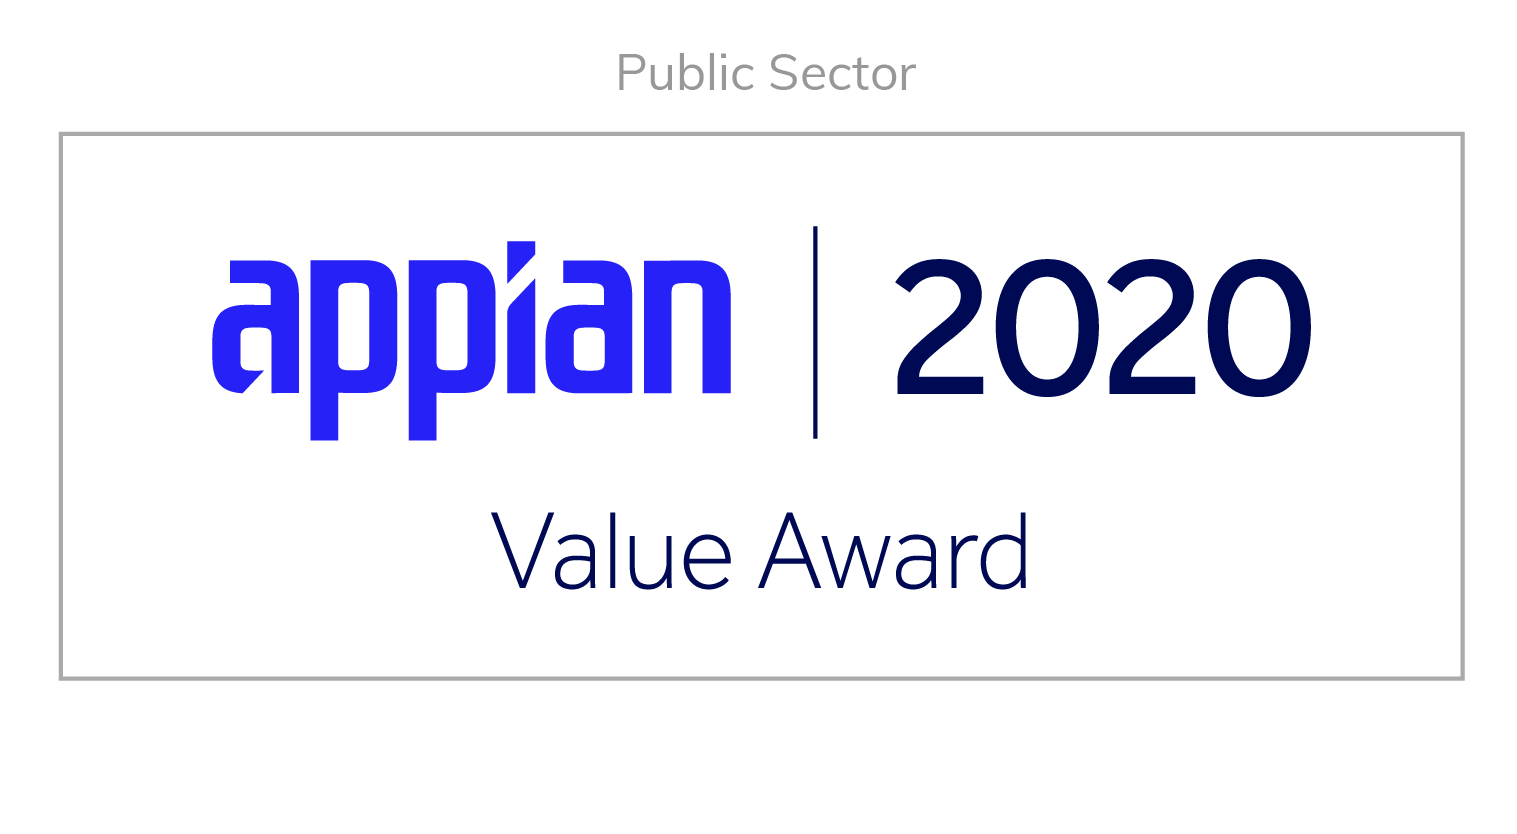 Value Award 2020 - Public Sector